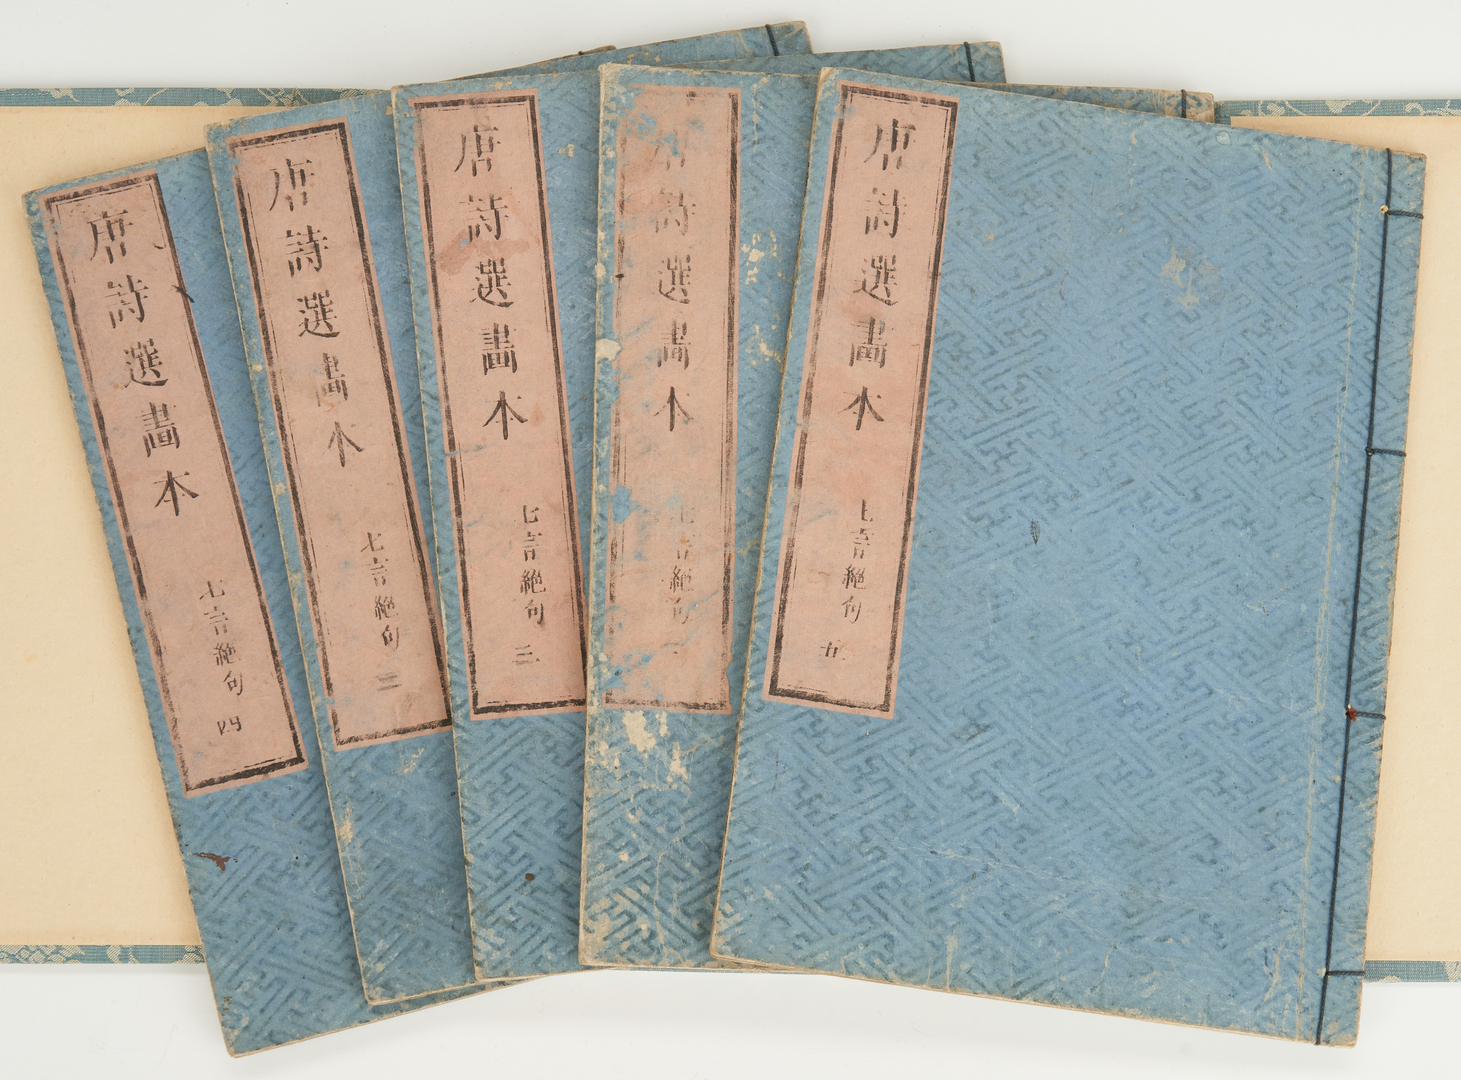 Lot 342: Hokusai and Sensei, Illustrations of Chinese Poems